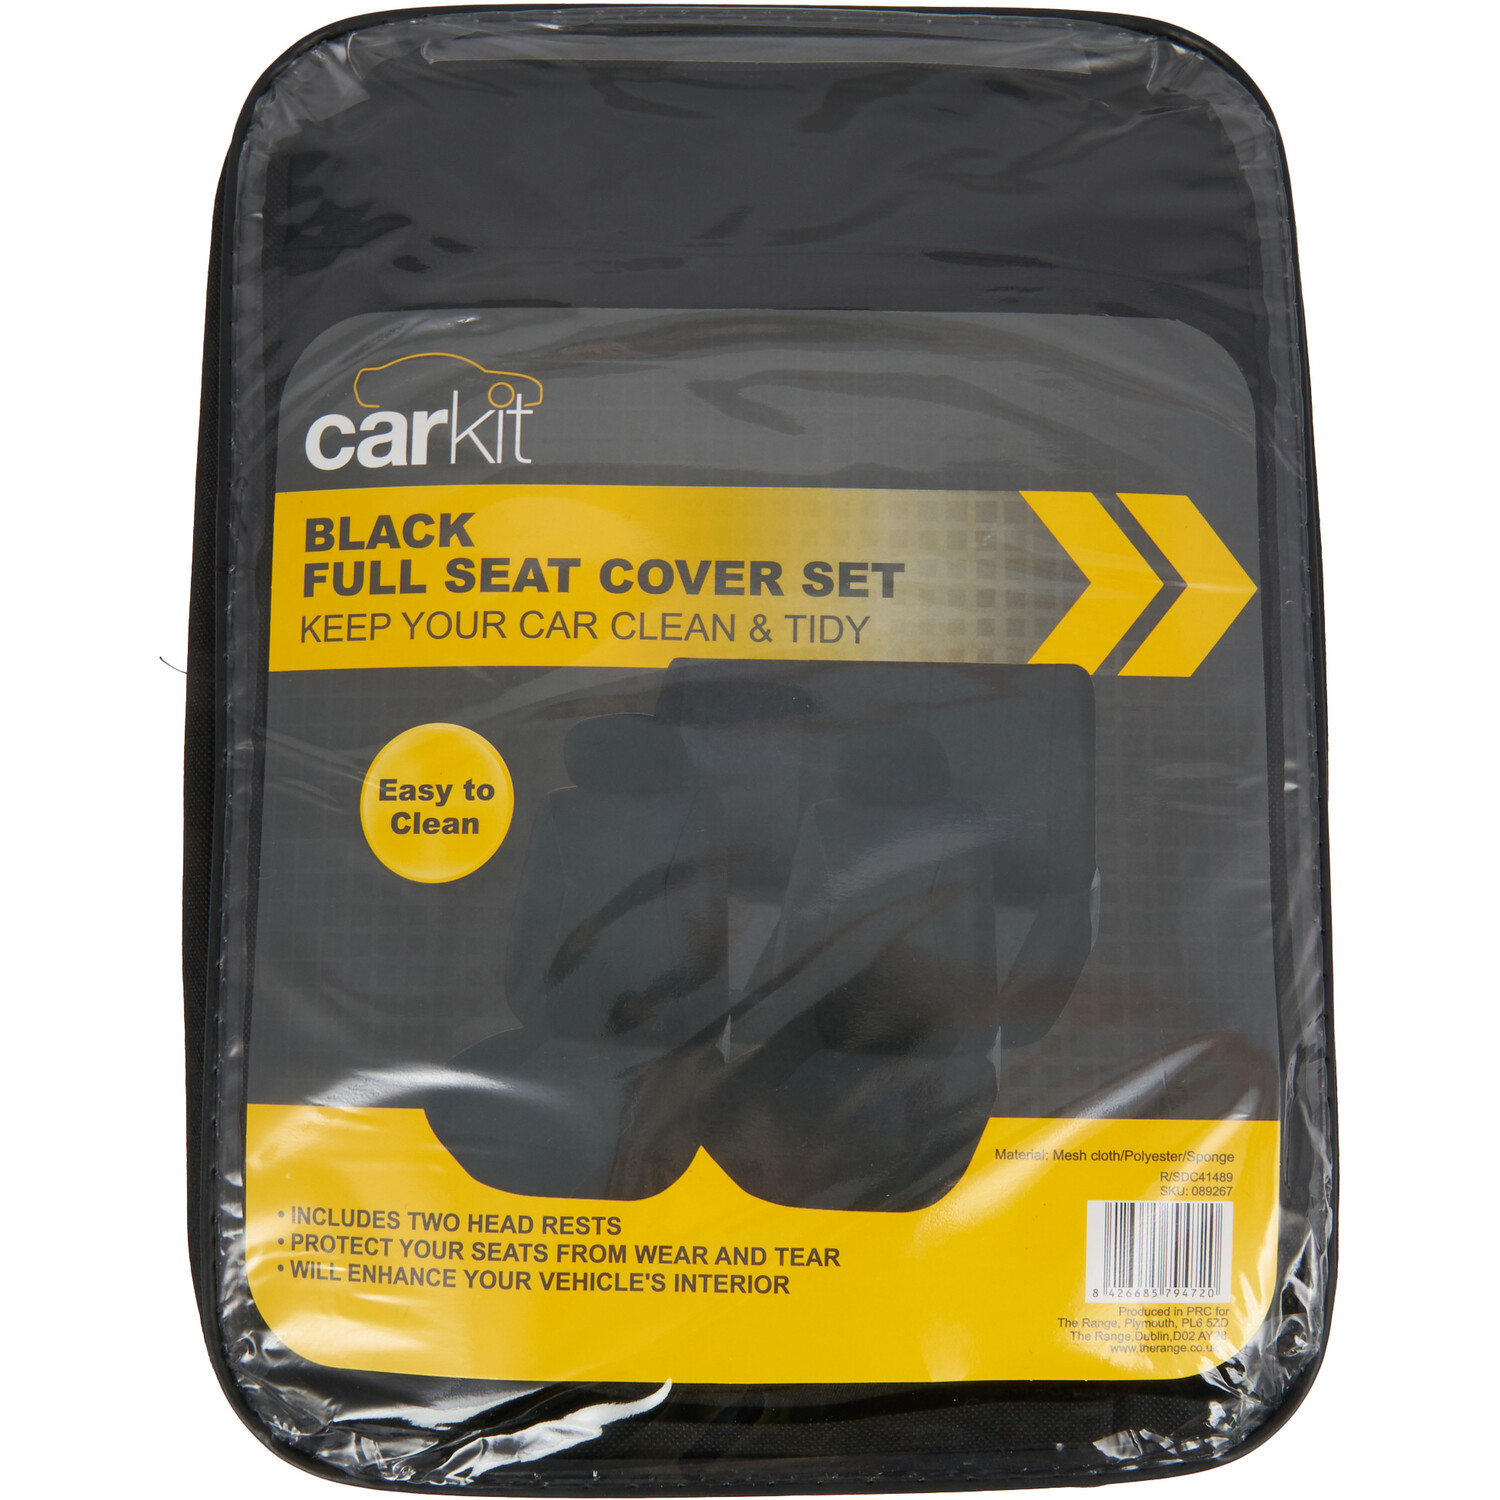 Carkit Full Seat Cover Set - Black Image 1